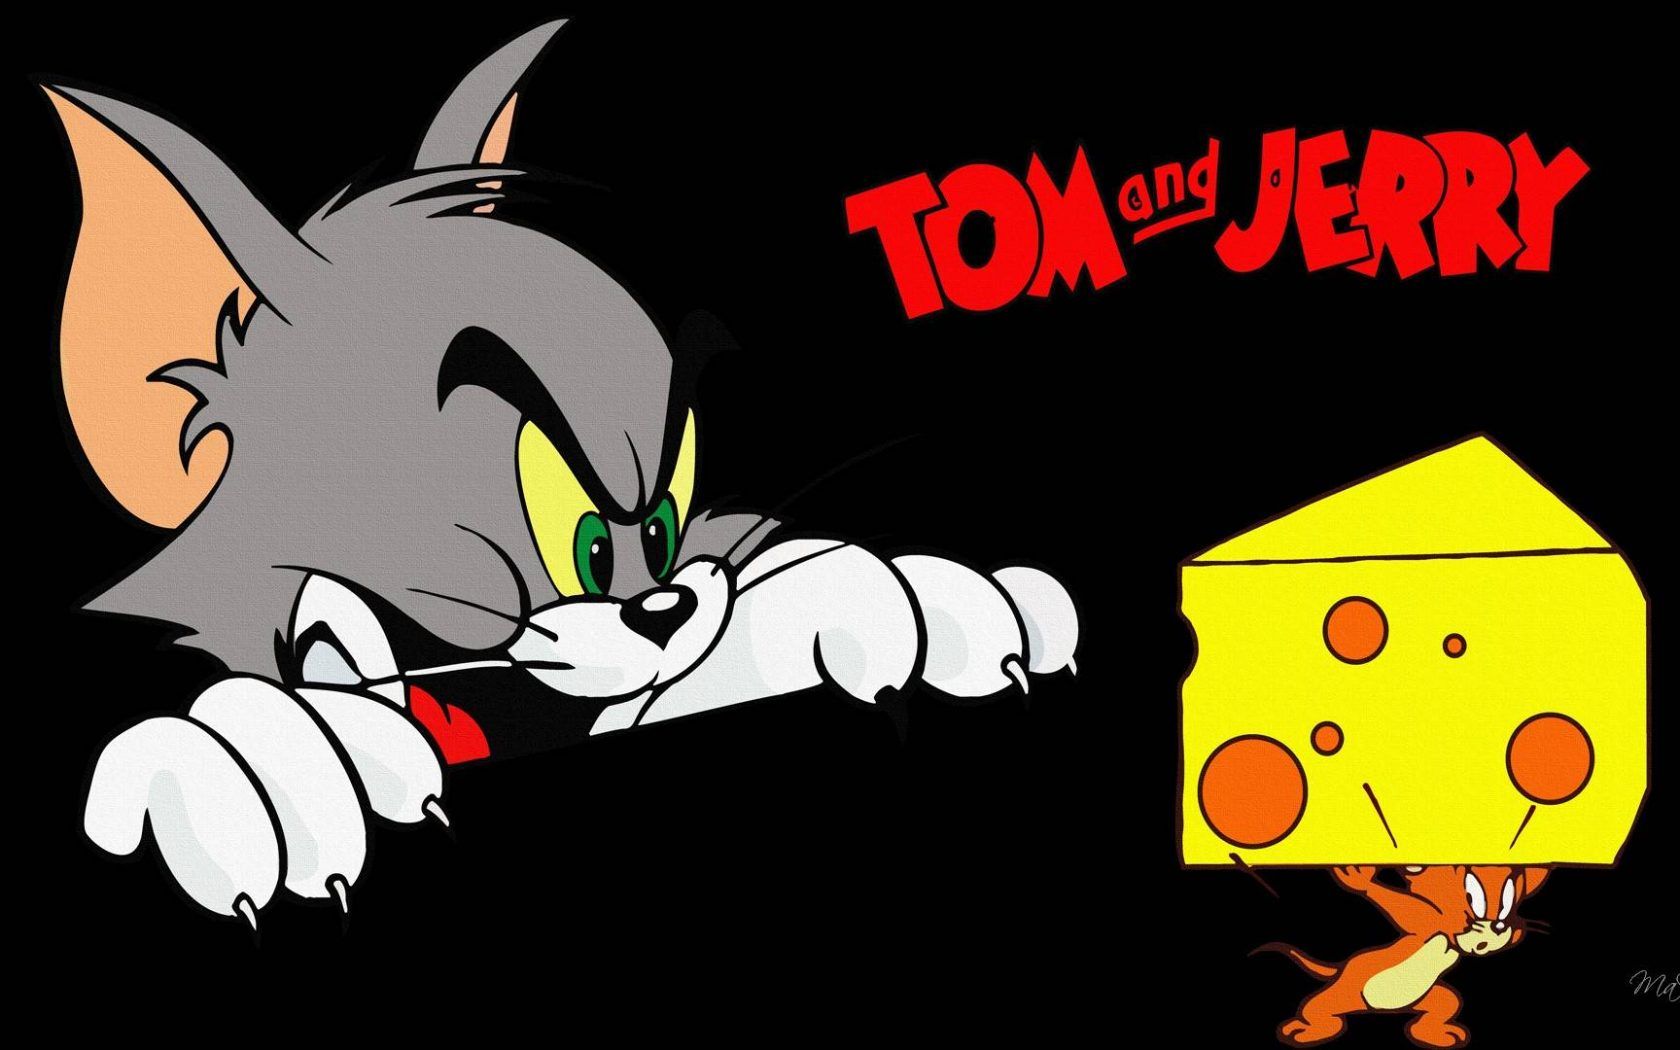 Tom на телефон. Том и Джерри. Обои том и Джерри. Обои на телефон том и Джерри. Том и Джерри картинки.